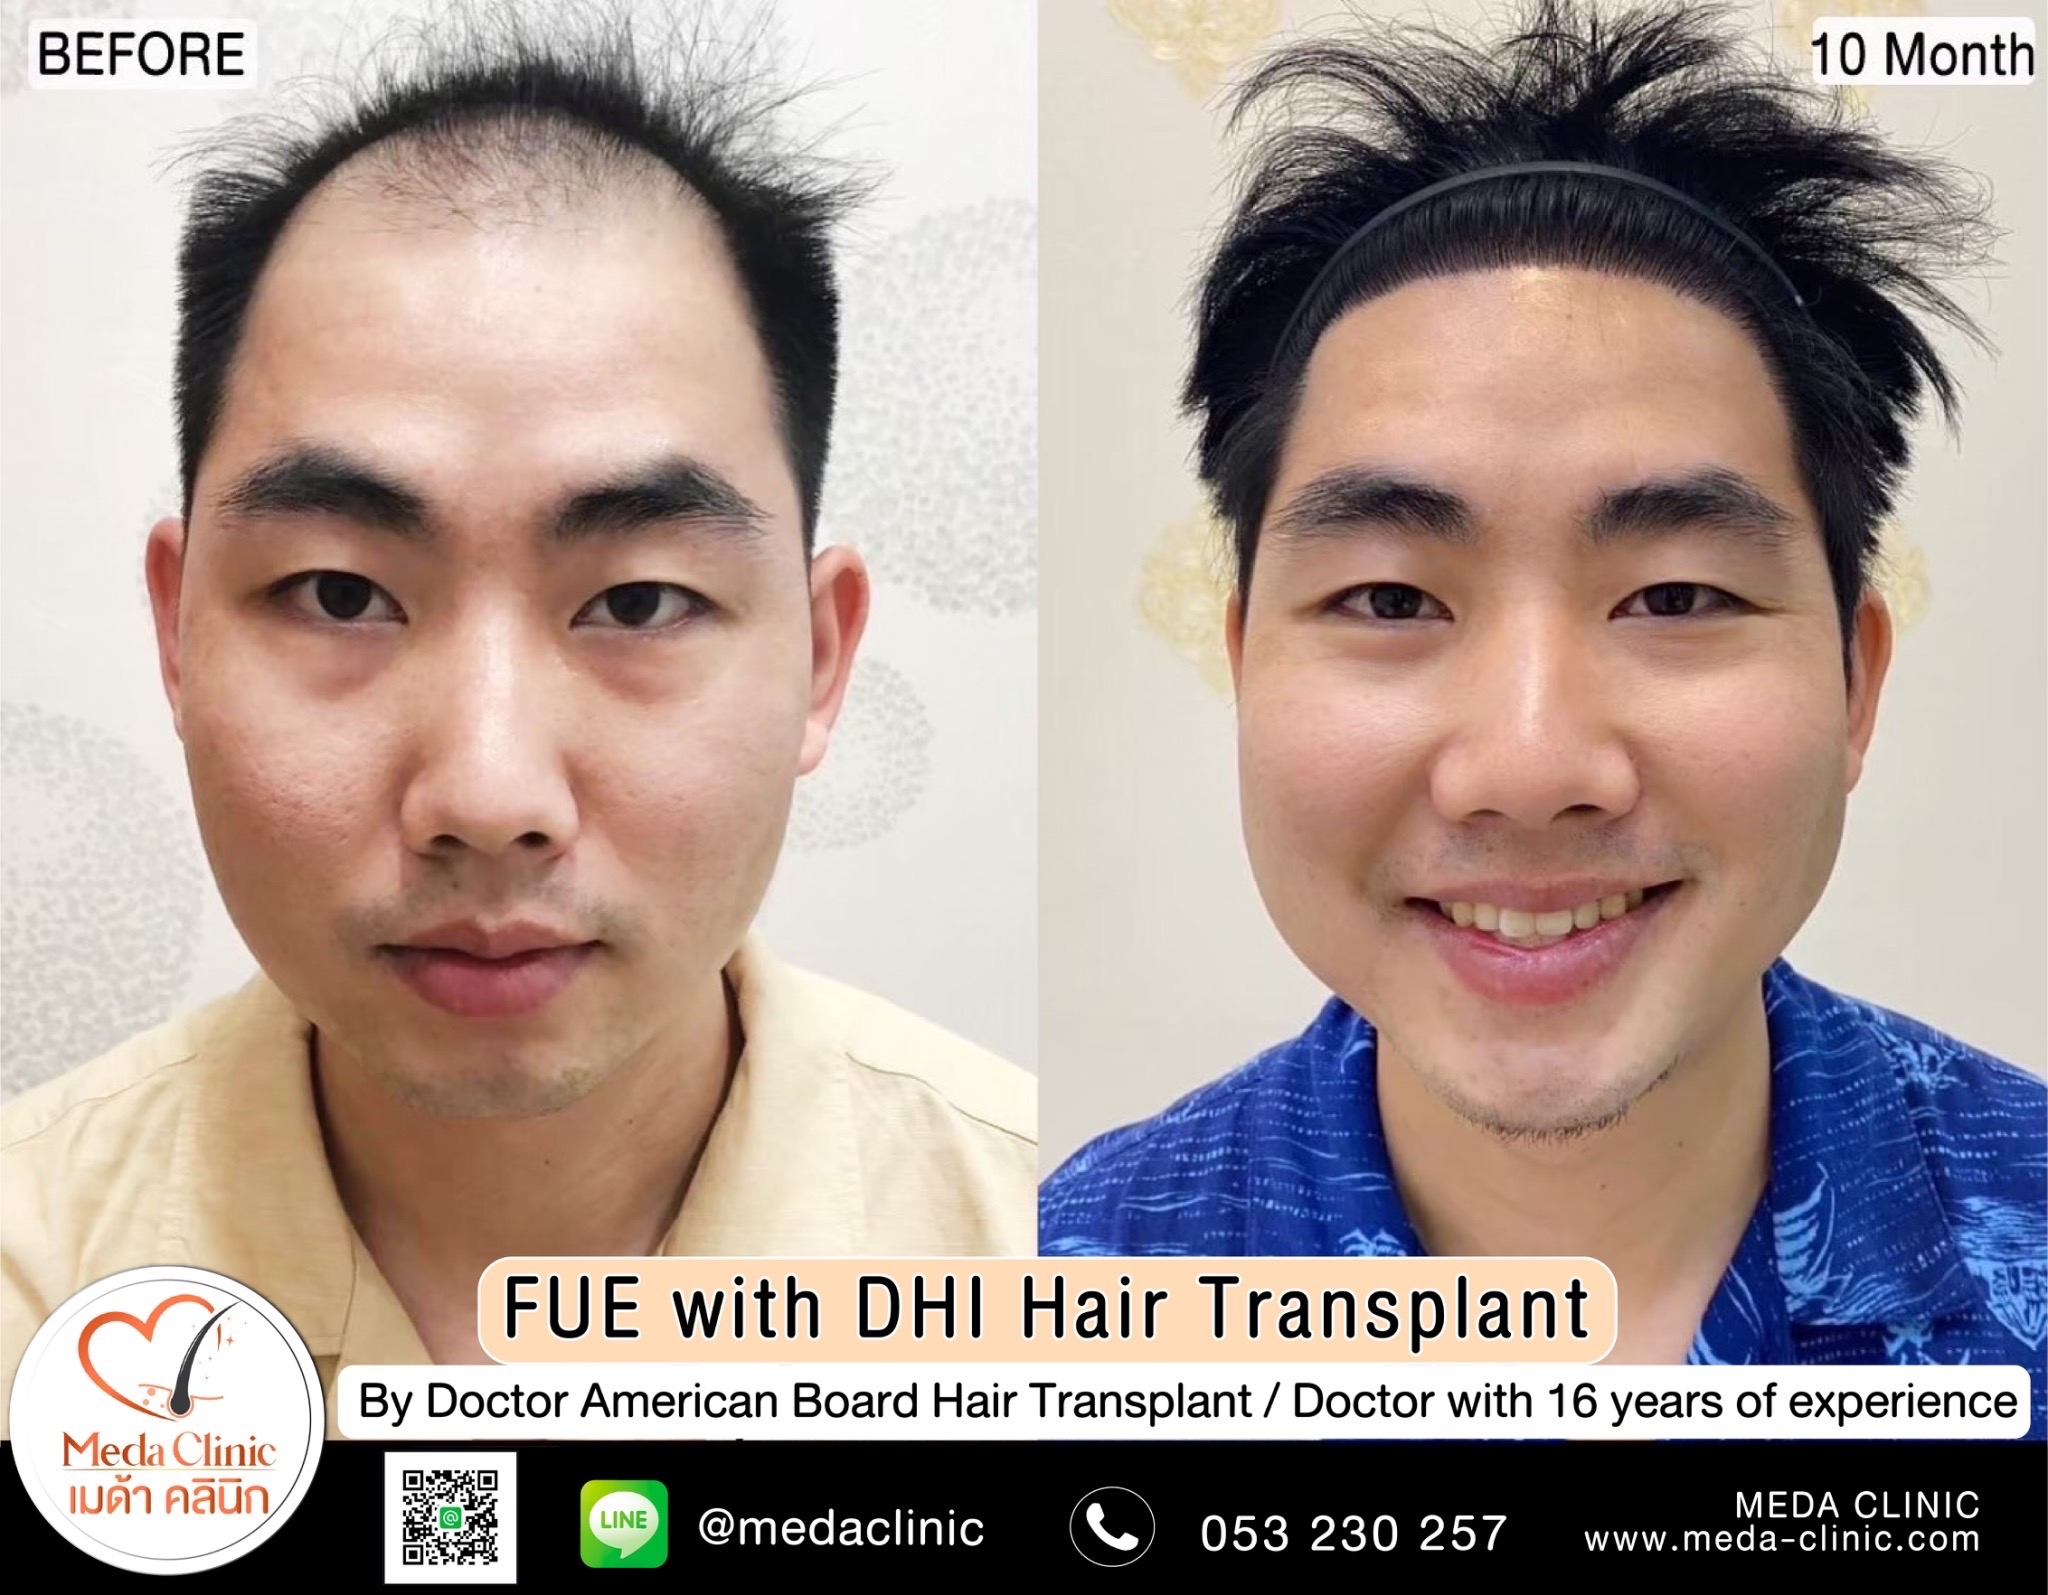 Eyebrow transplant Chiang Mai